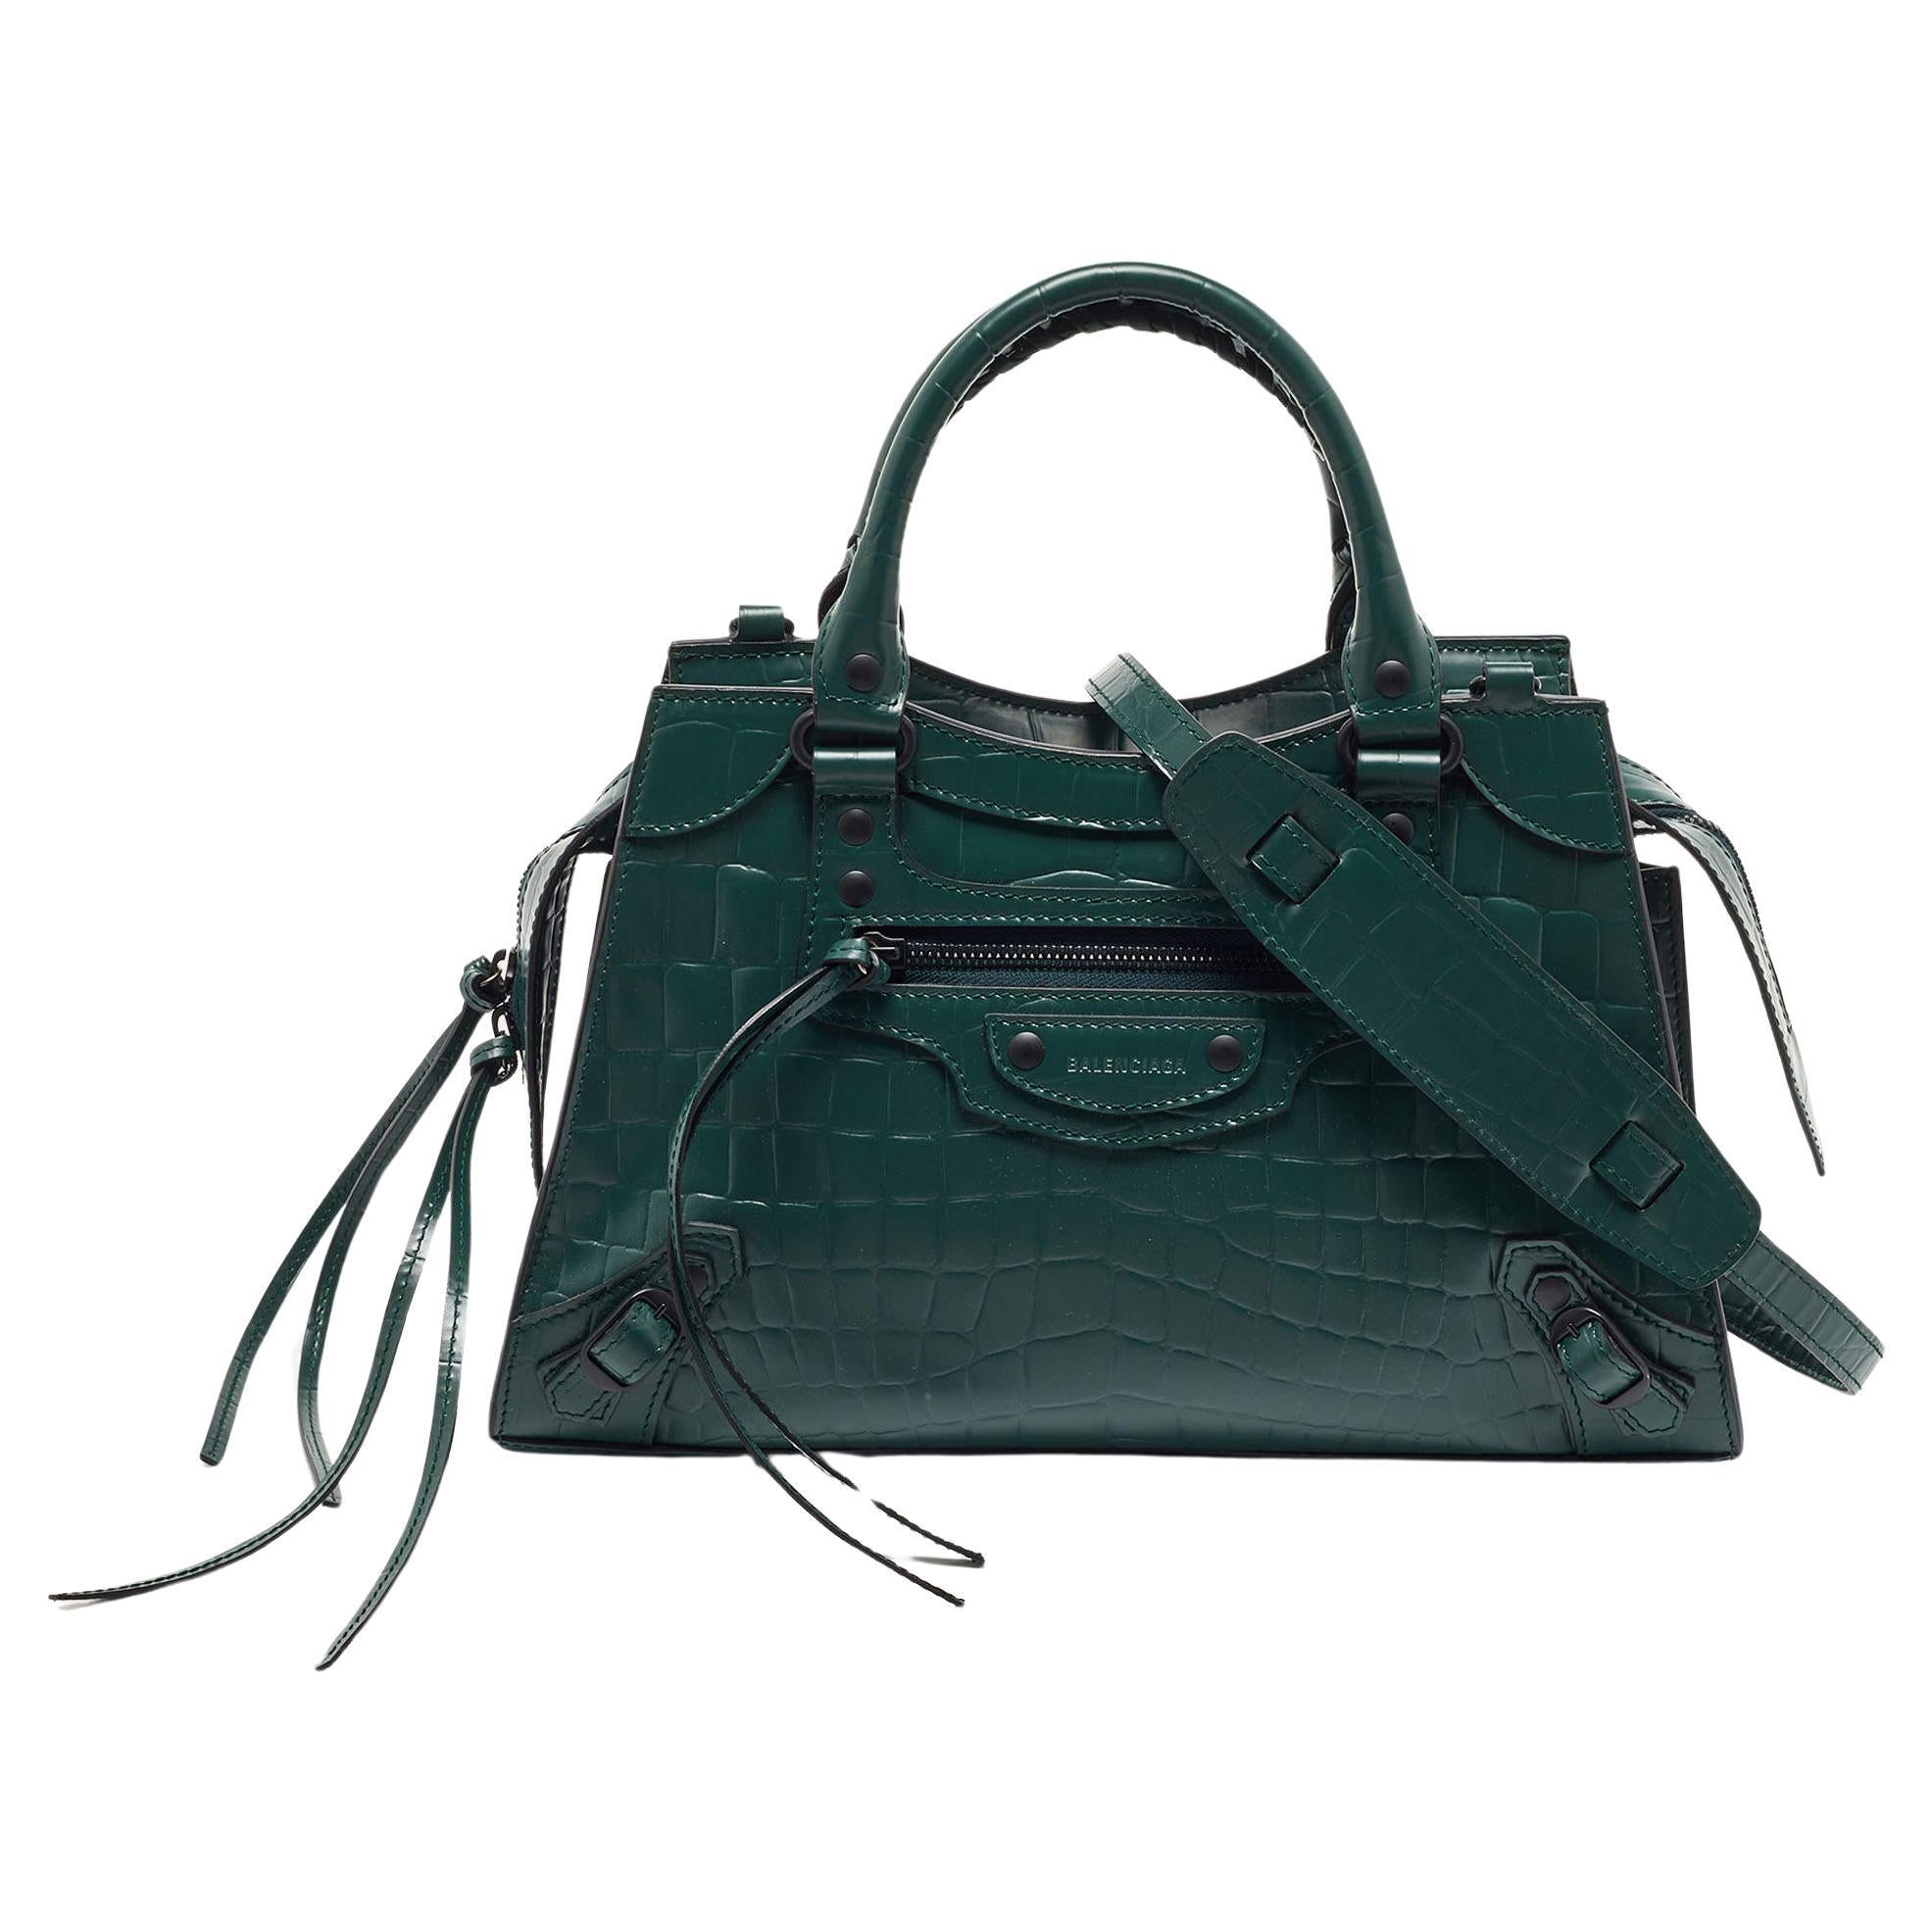 Balenciaga Green Croc Embossed Leather Classic City Bag